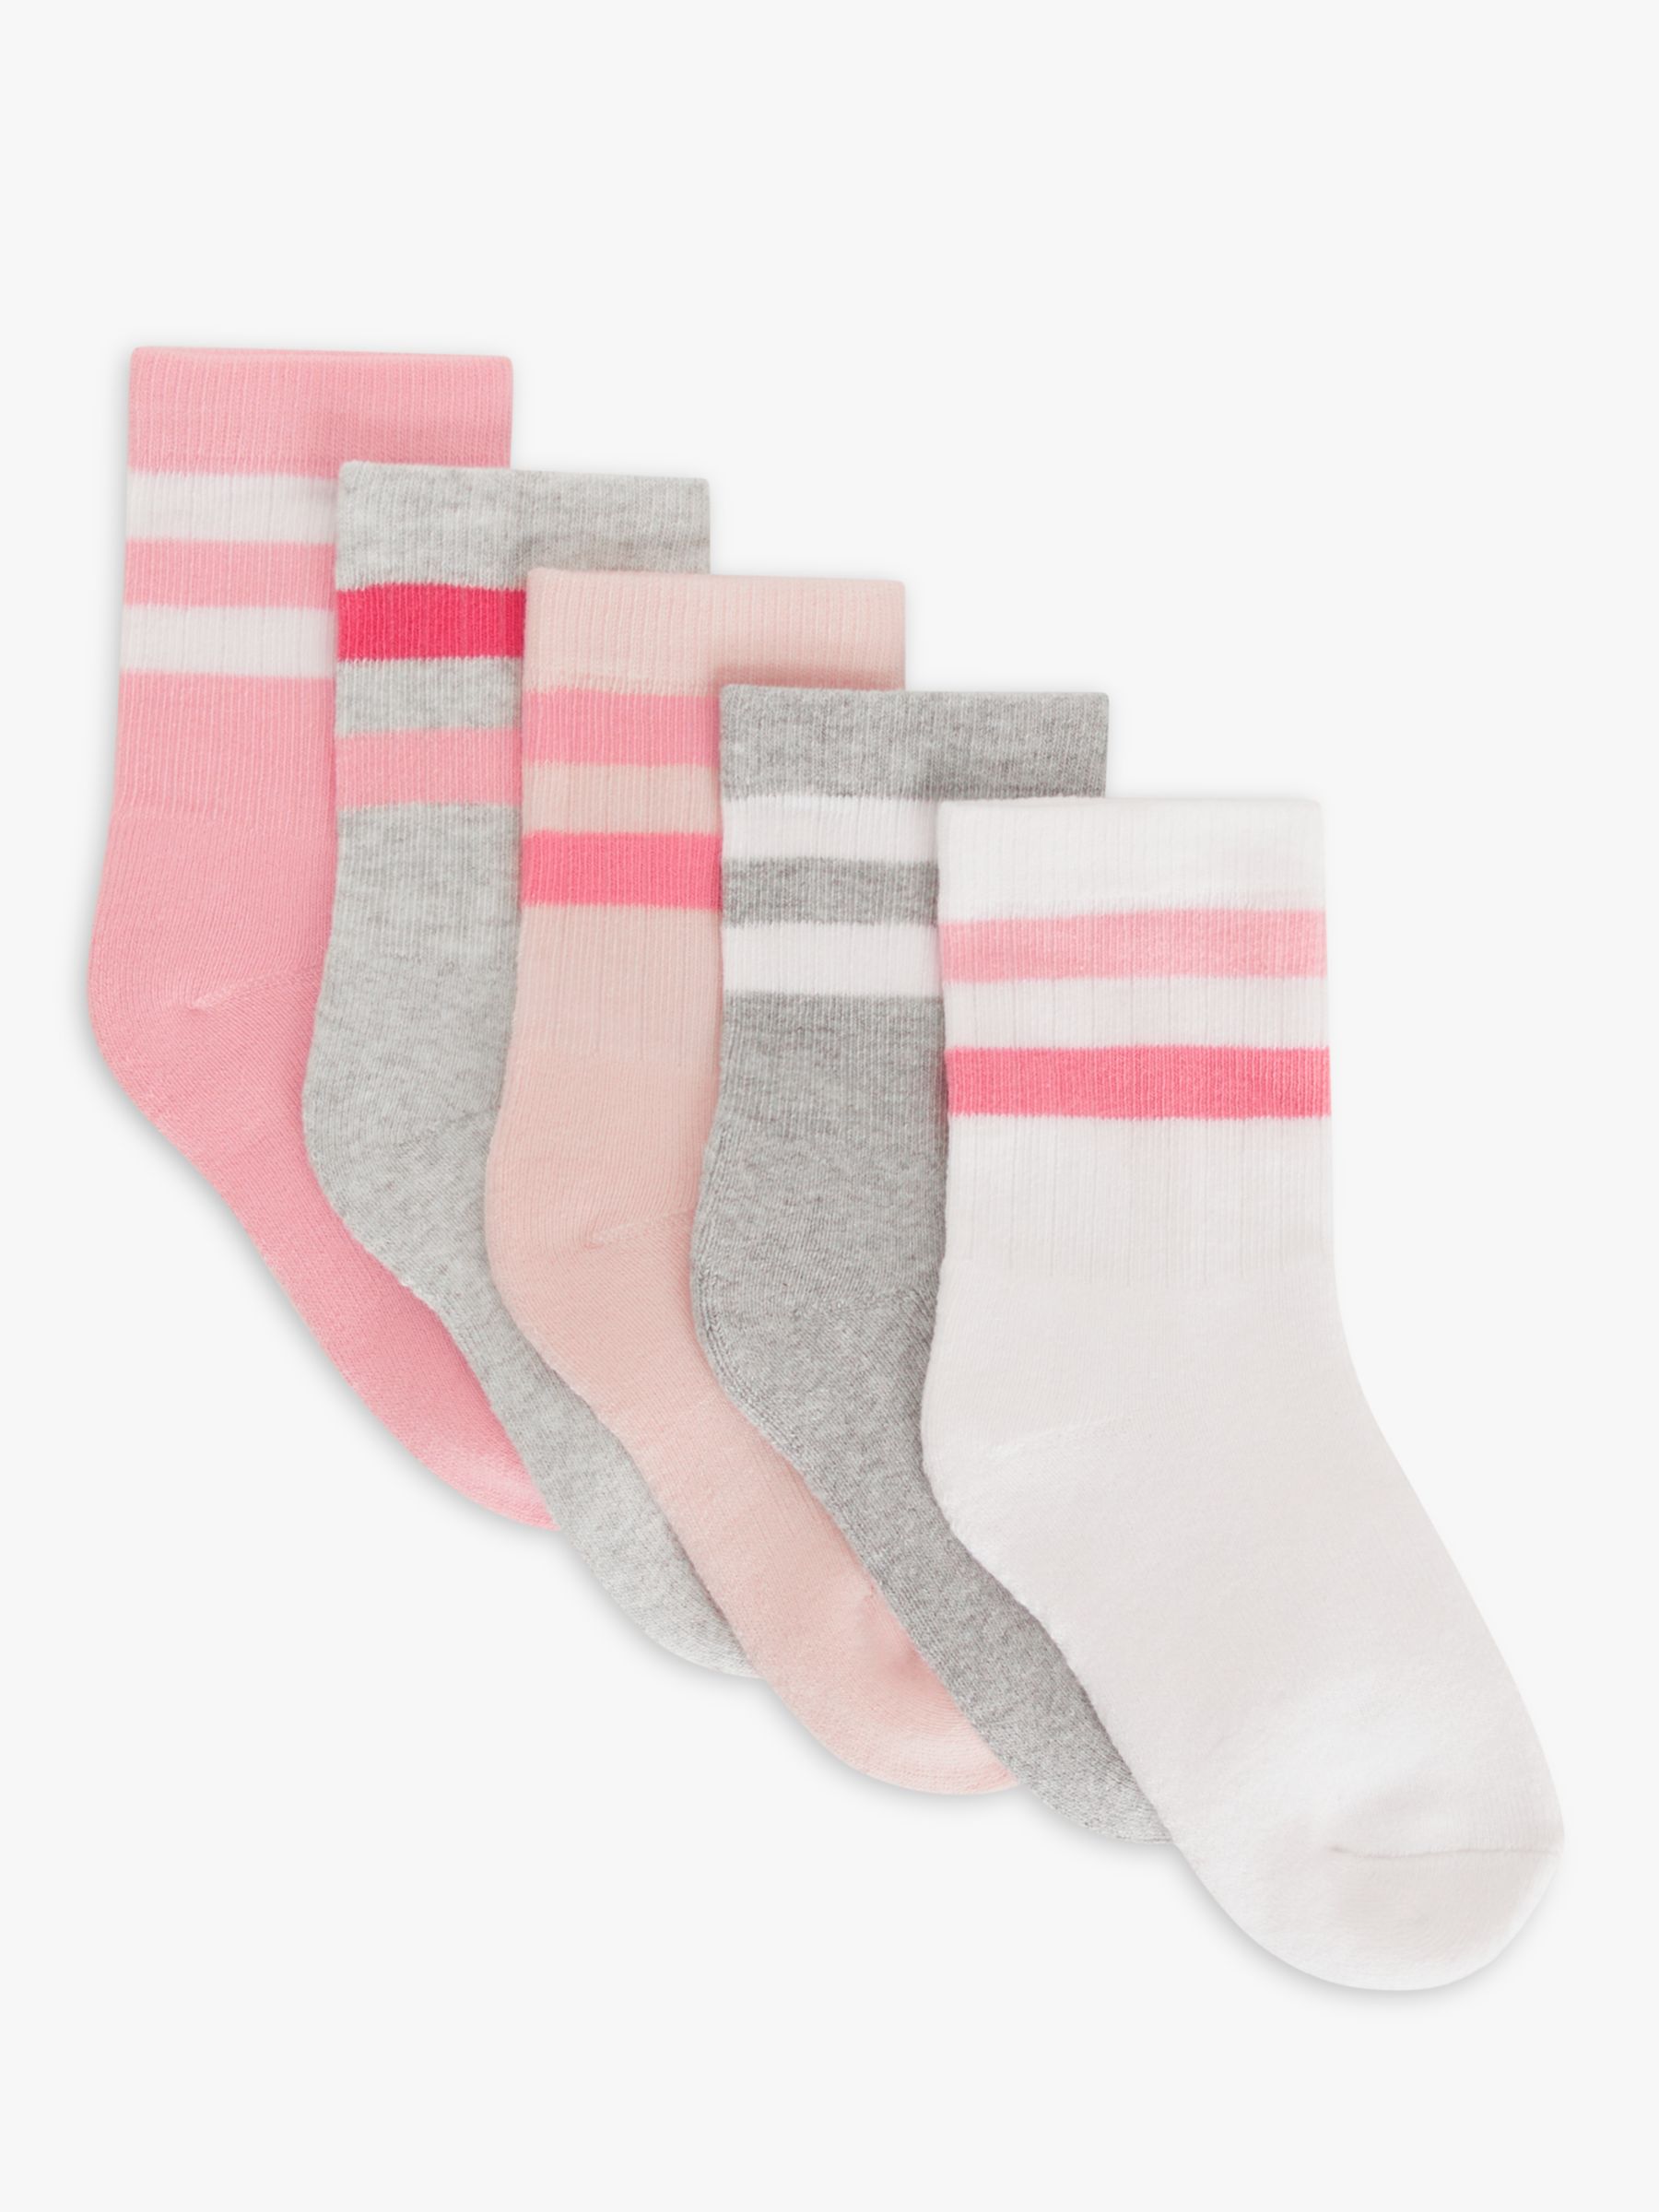 John Lewis Kids' Sport Striped Tube Socks, Pack of 5, Pink/Multi, 4-7